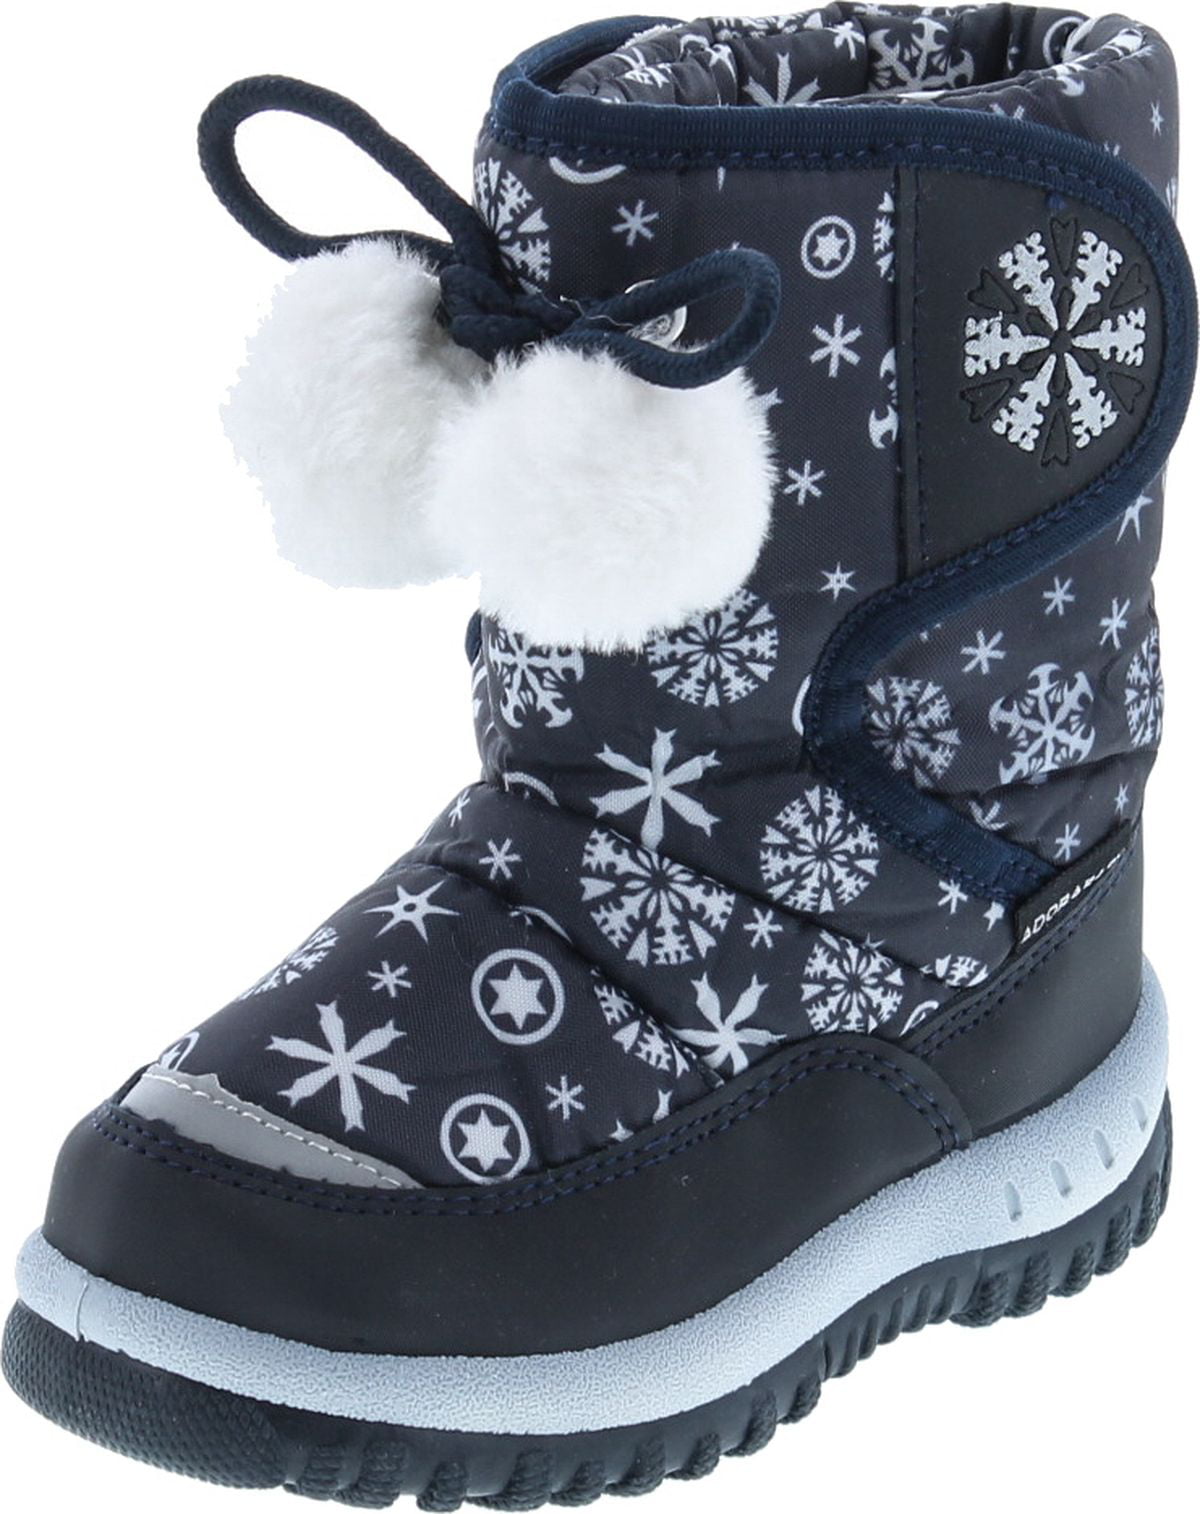 snow boots kids walmart